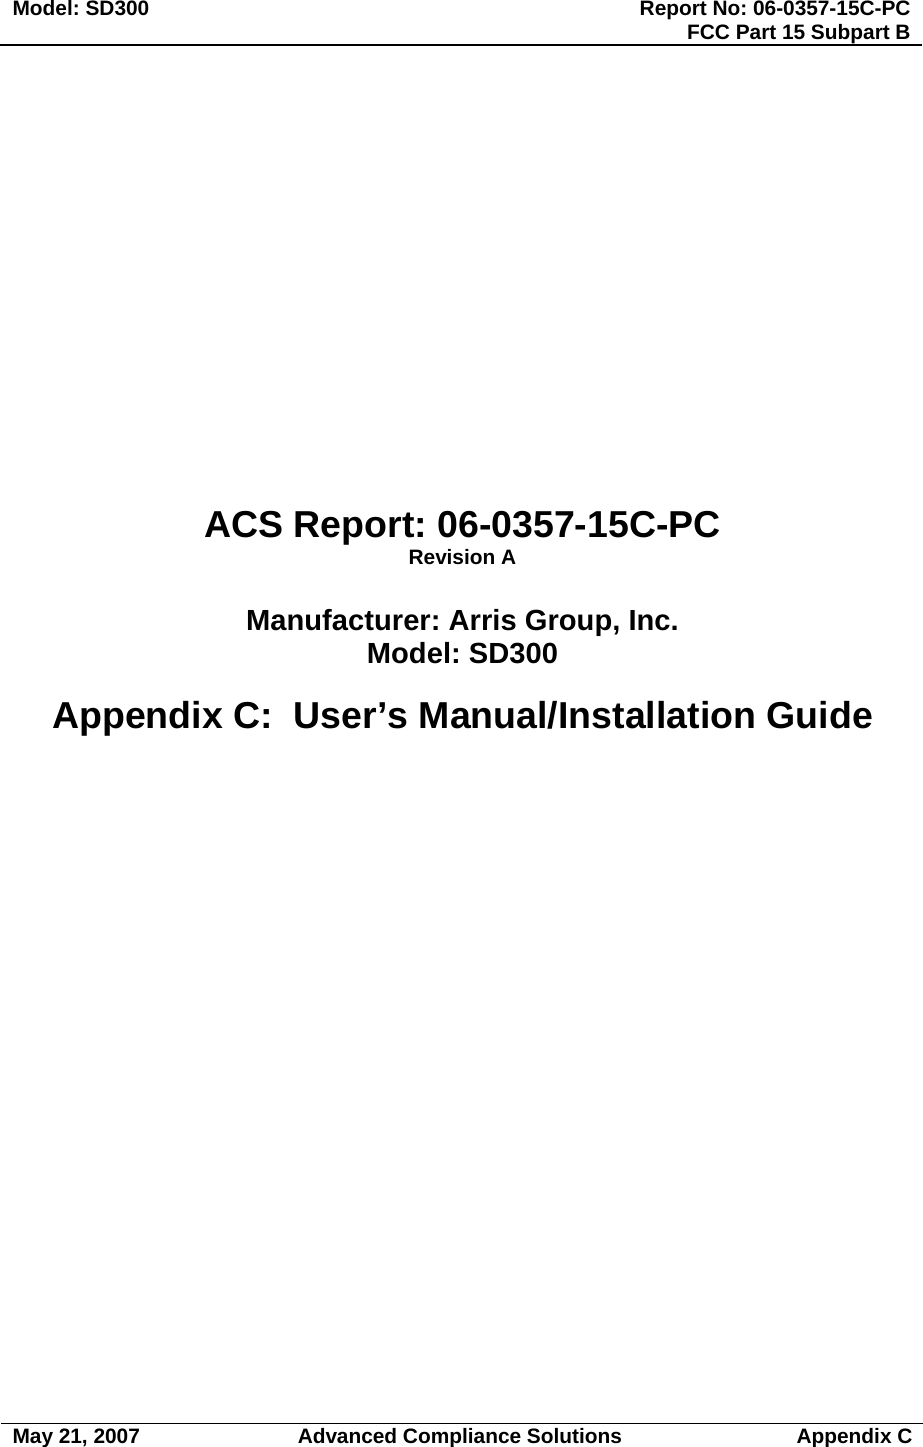 Model: SD300  Report No: 06-0357-15C-PCFCC Part 15 Subpart B                                                                  May 21, 2007 Advanced Compliance Solutions Appendix C             ACS Report: 06-0357-15C-PC Revision A  Manufacturer: Arris Group, Inc.  Model: SD300  Appendix C:  User’s Manual/Installation Guide 